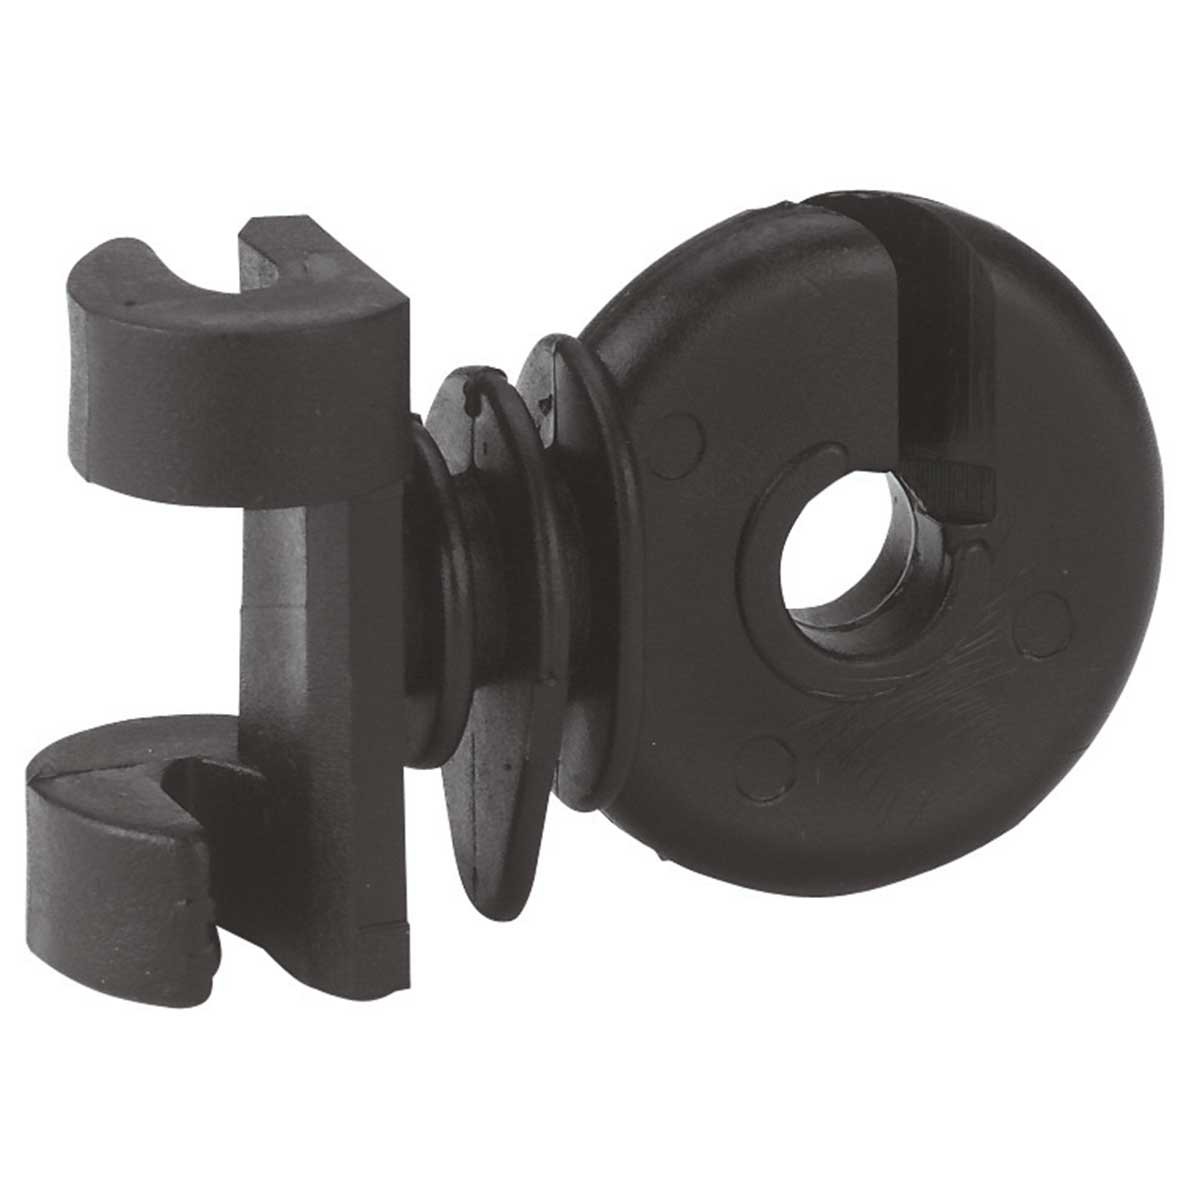 Spare insulator clip for round steel post